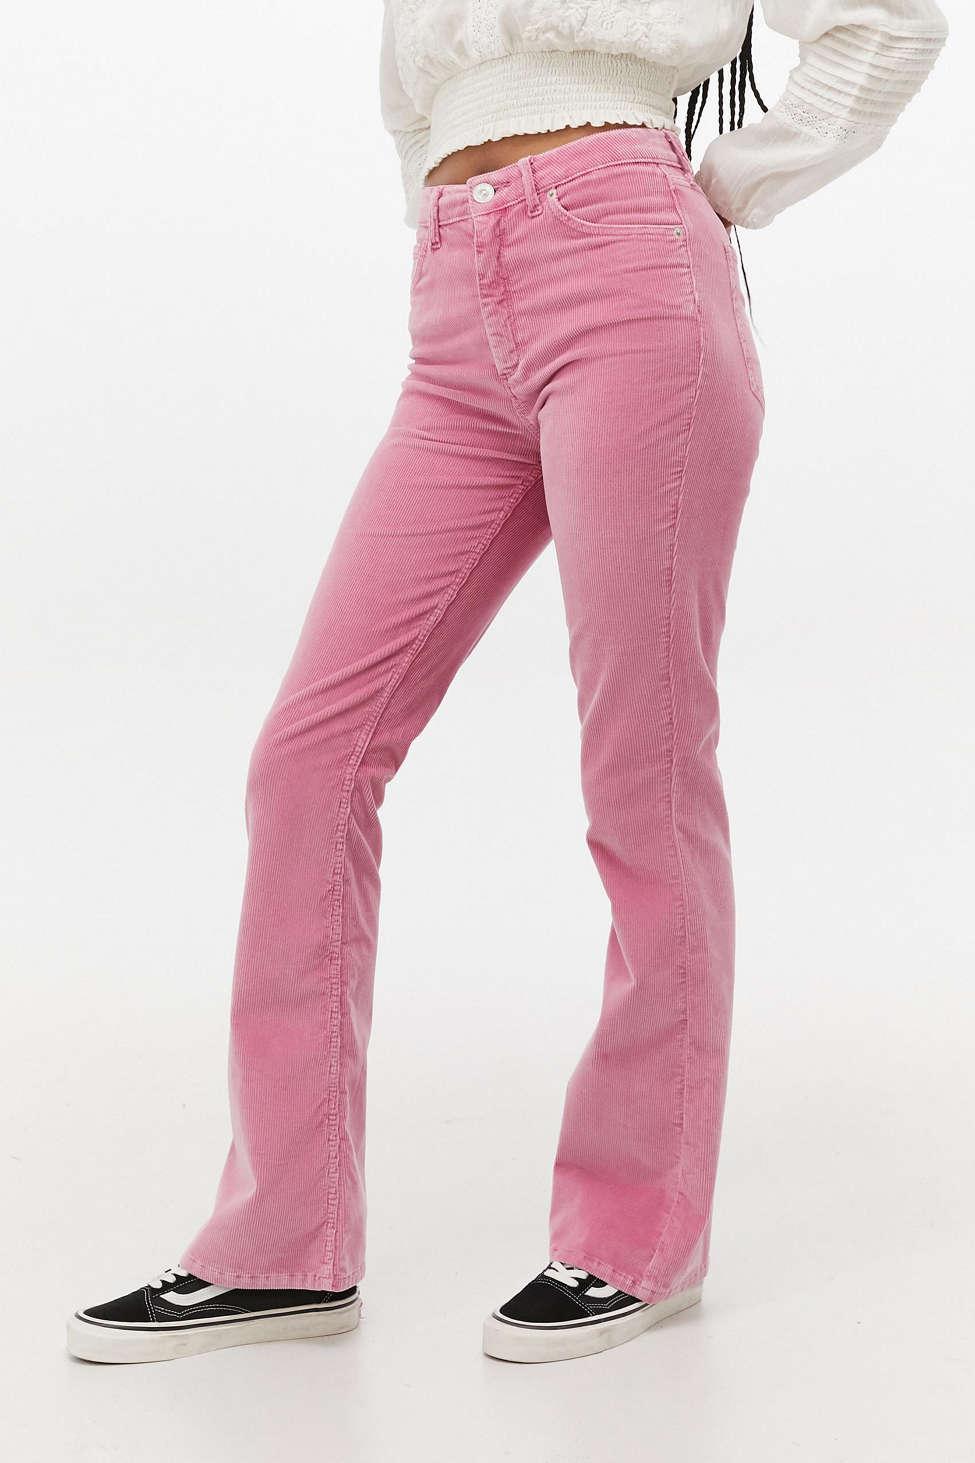 MUDD Jeans Corduroy Flare Pink Zipper Pants 13 Sacramento Mall